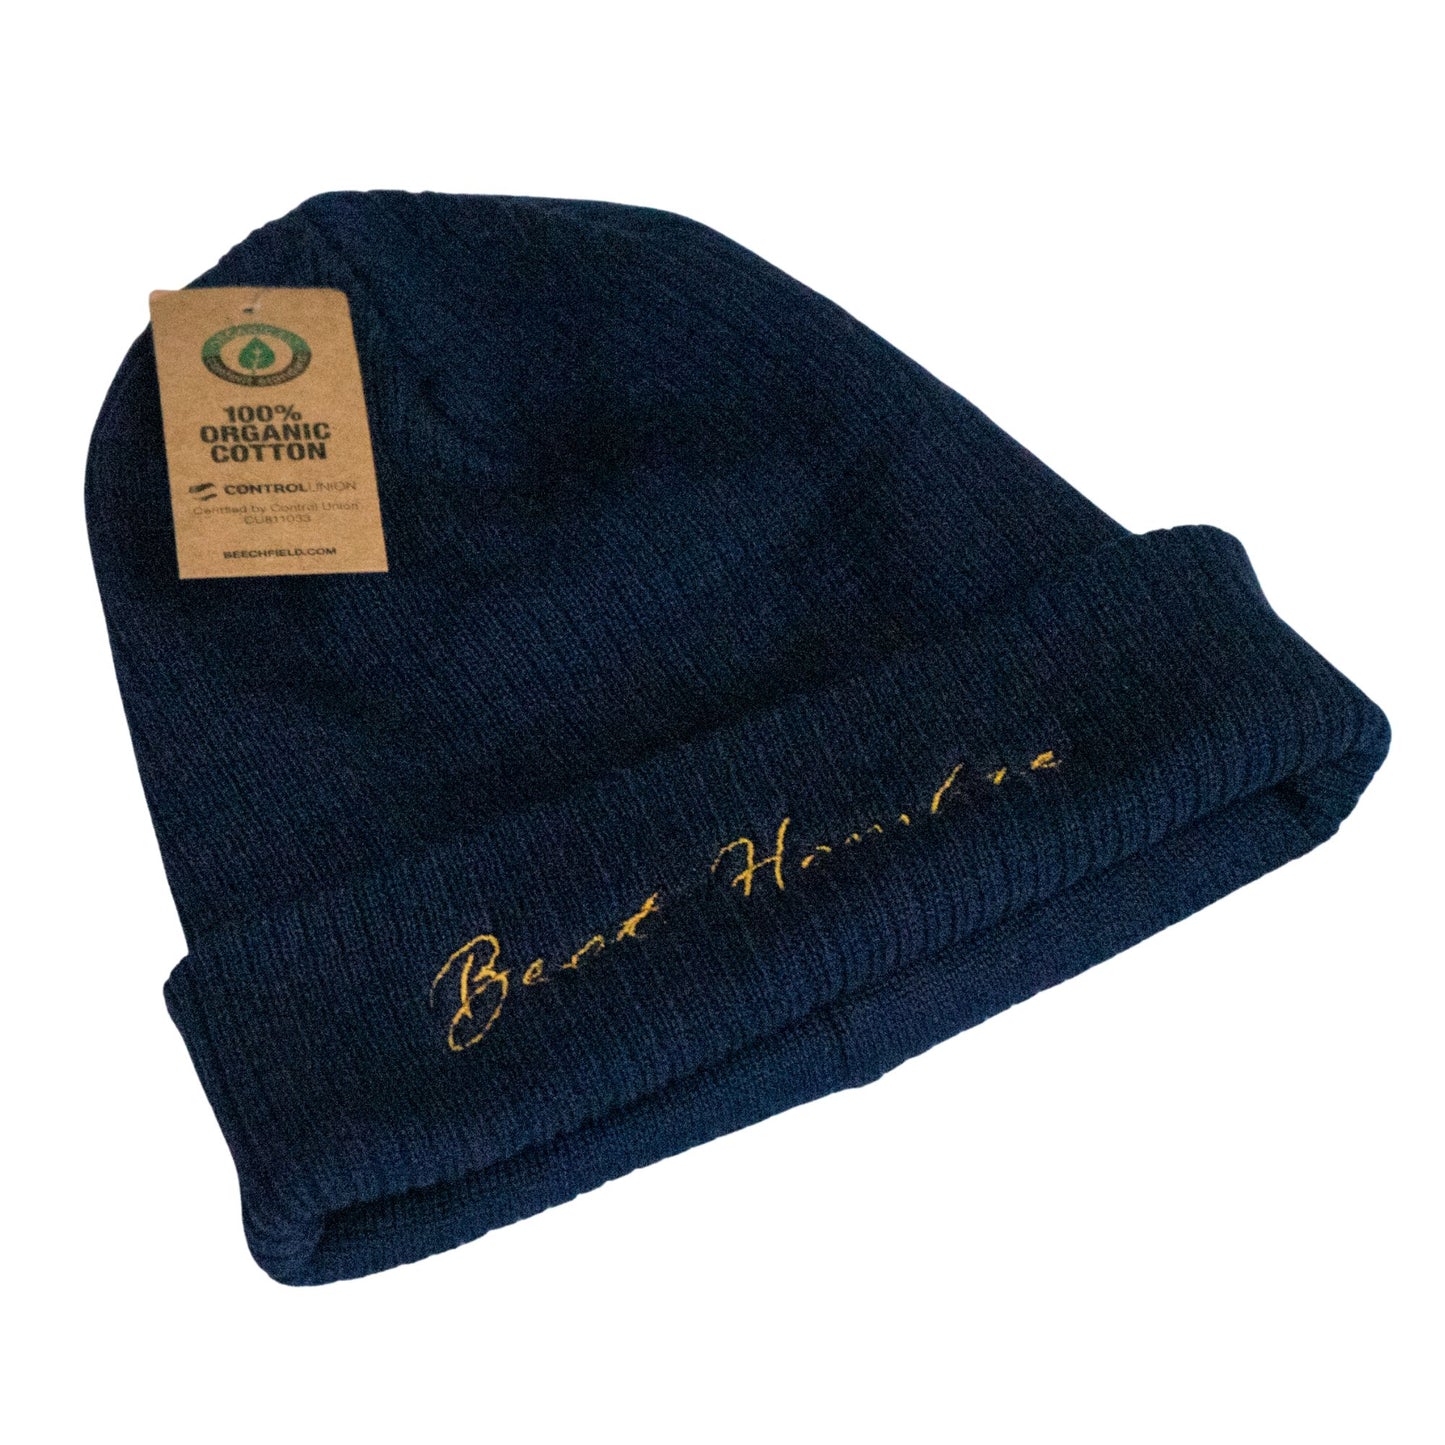 100% Organic Cotton Ribbed Cuffed Beanie Hat